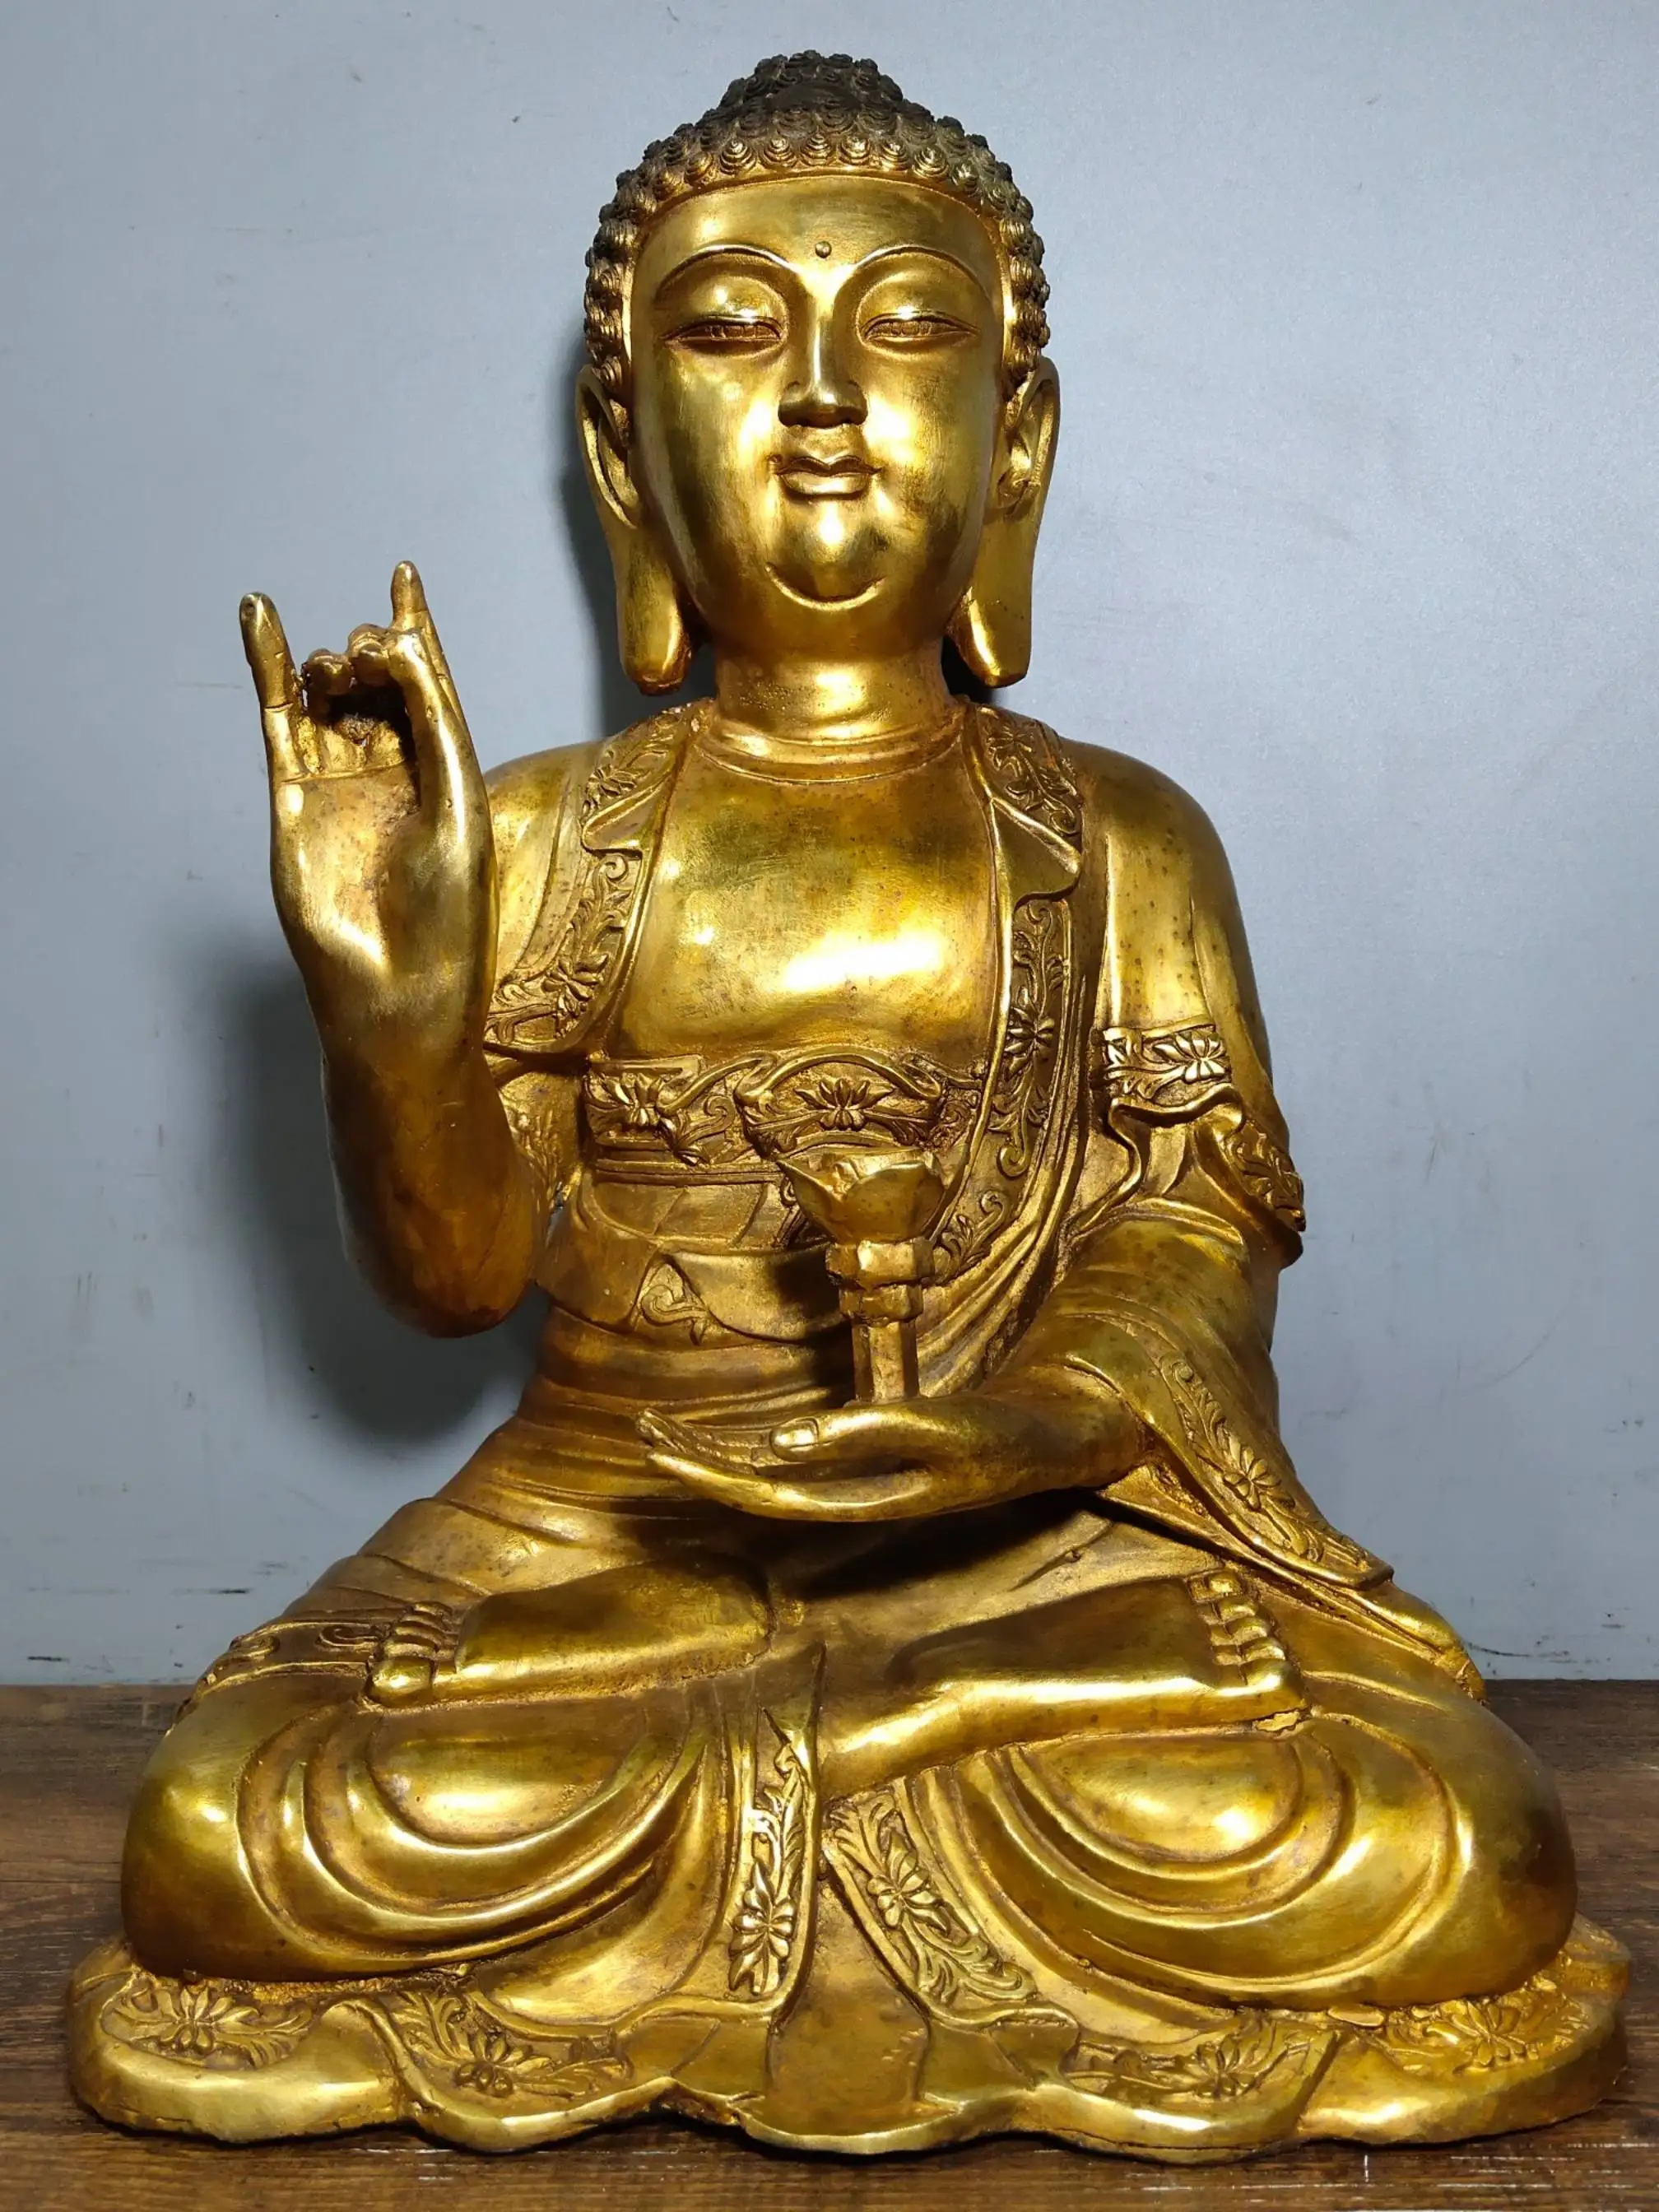 

16"Tibet Buddhism Temple Old bronze Gilt Big Day Tathagata Shakyamuni Buddha Statue Amitabha statue Enshrine the Buddha